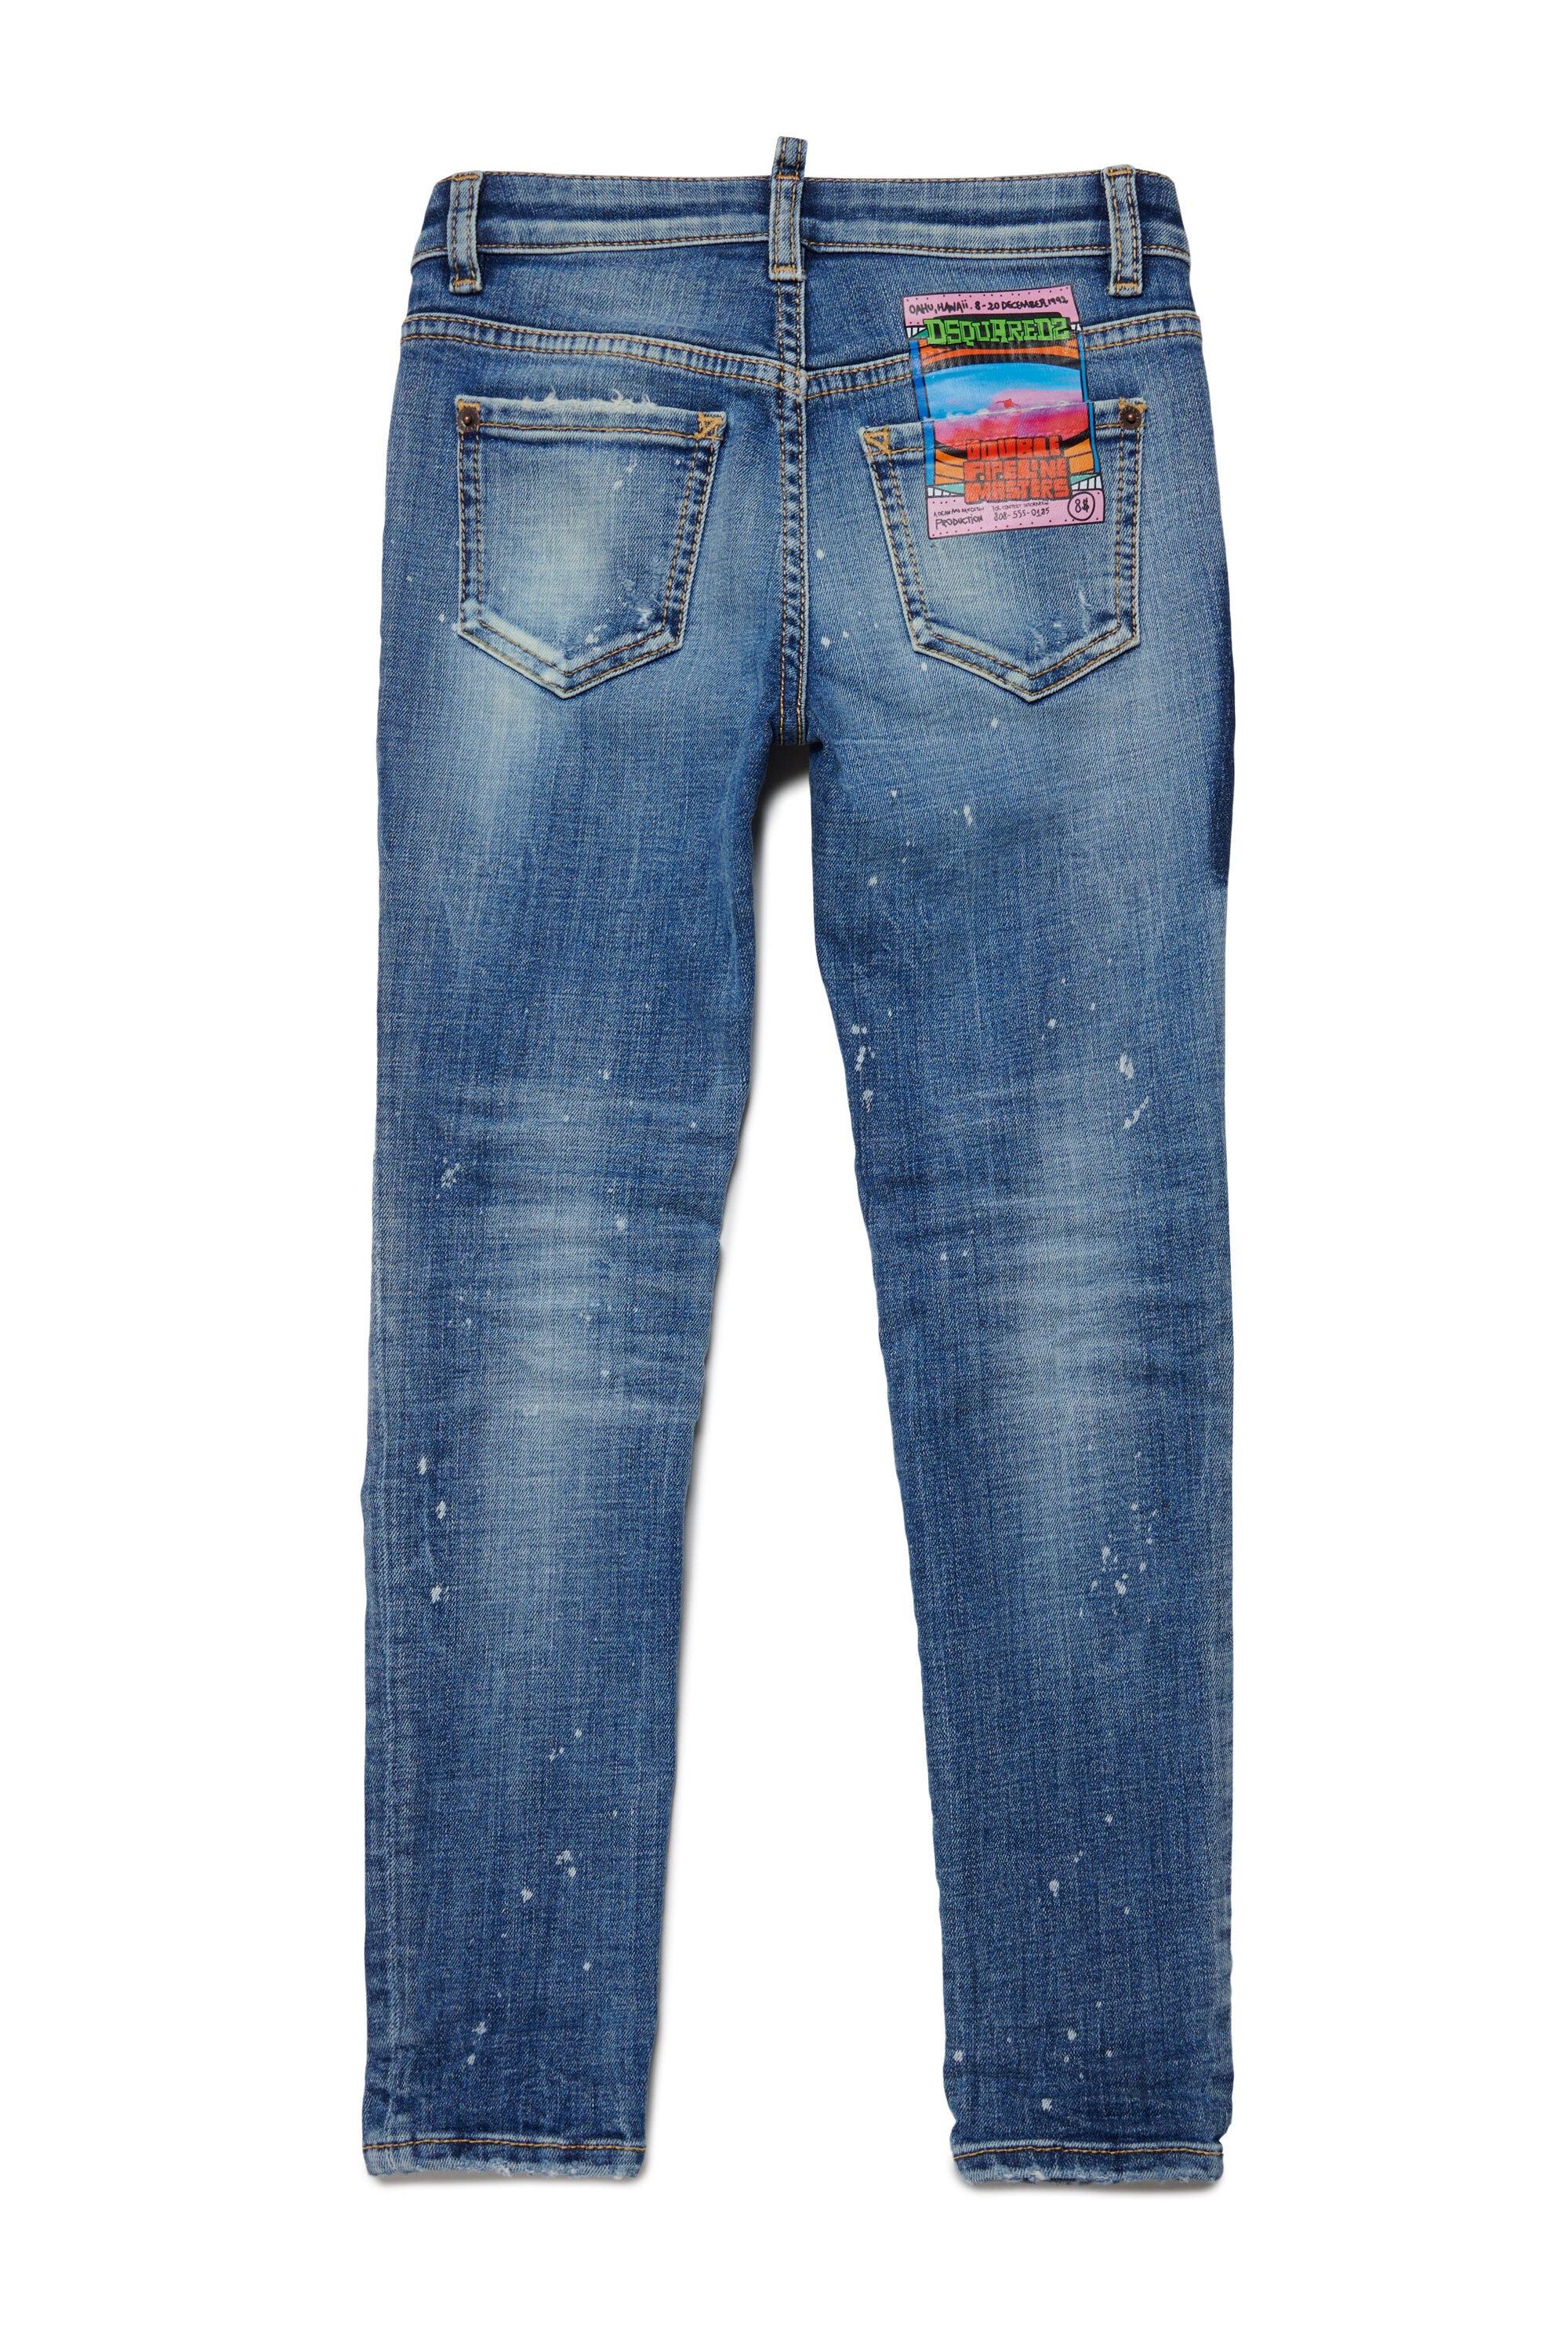 Shaded blue skinny jeans with breaks - Twiggy